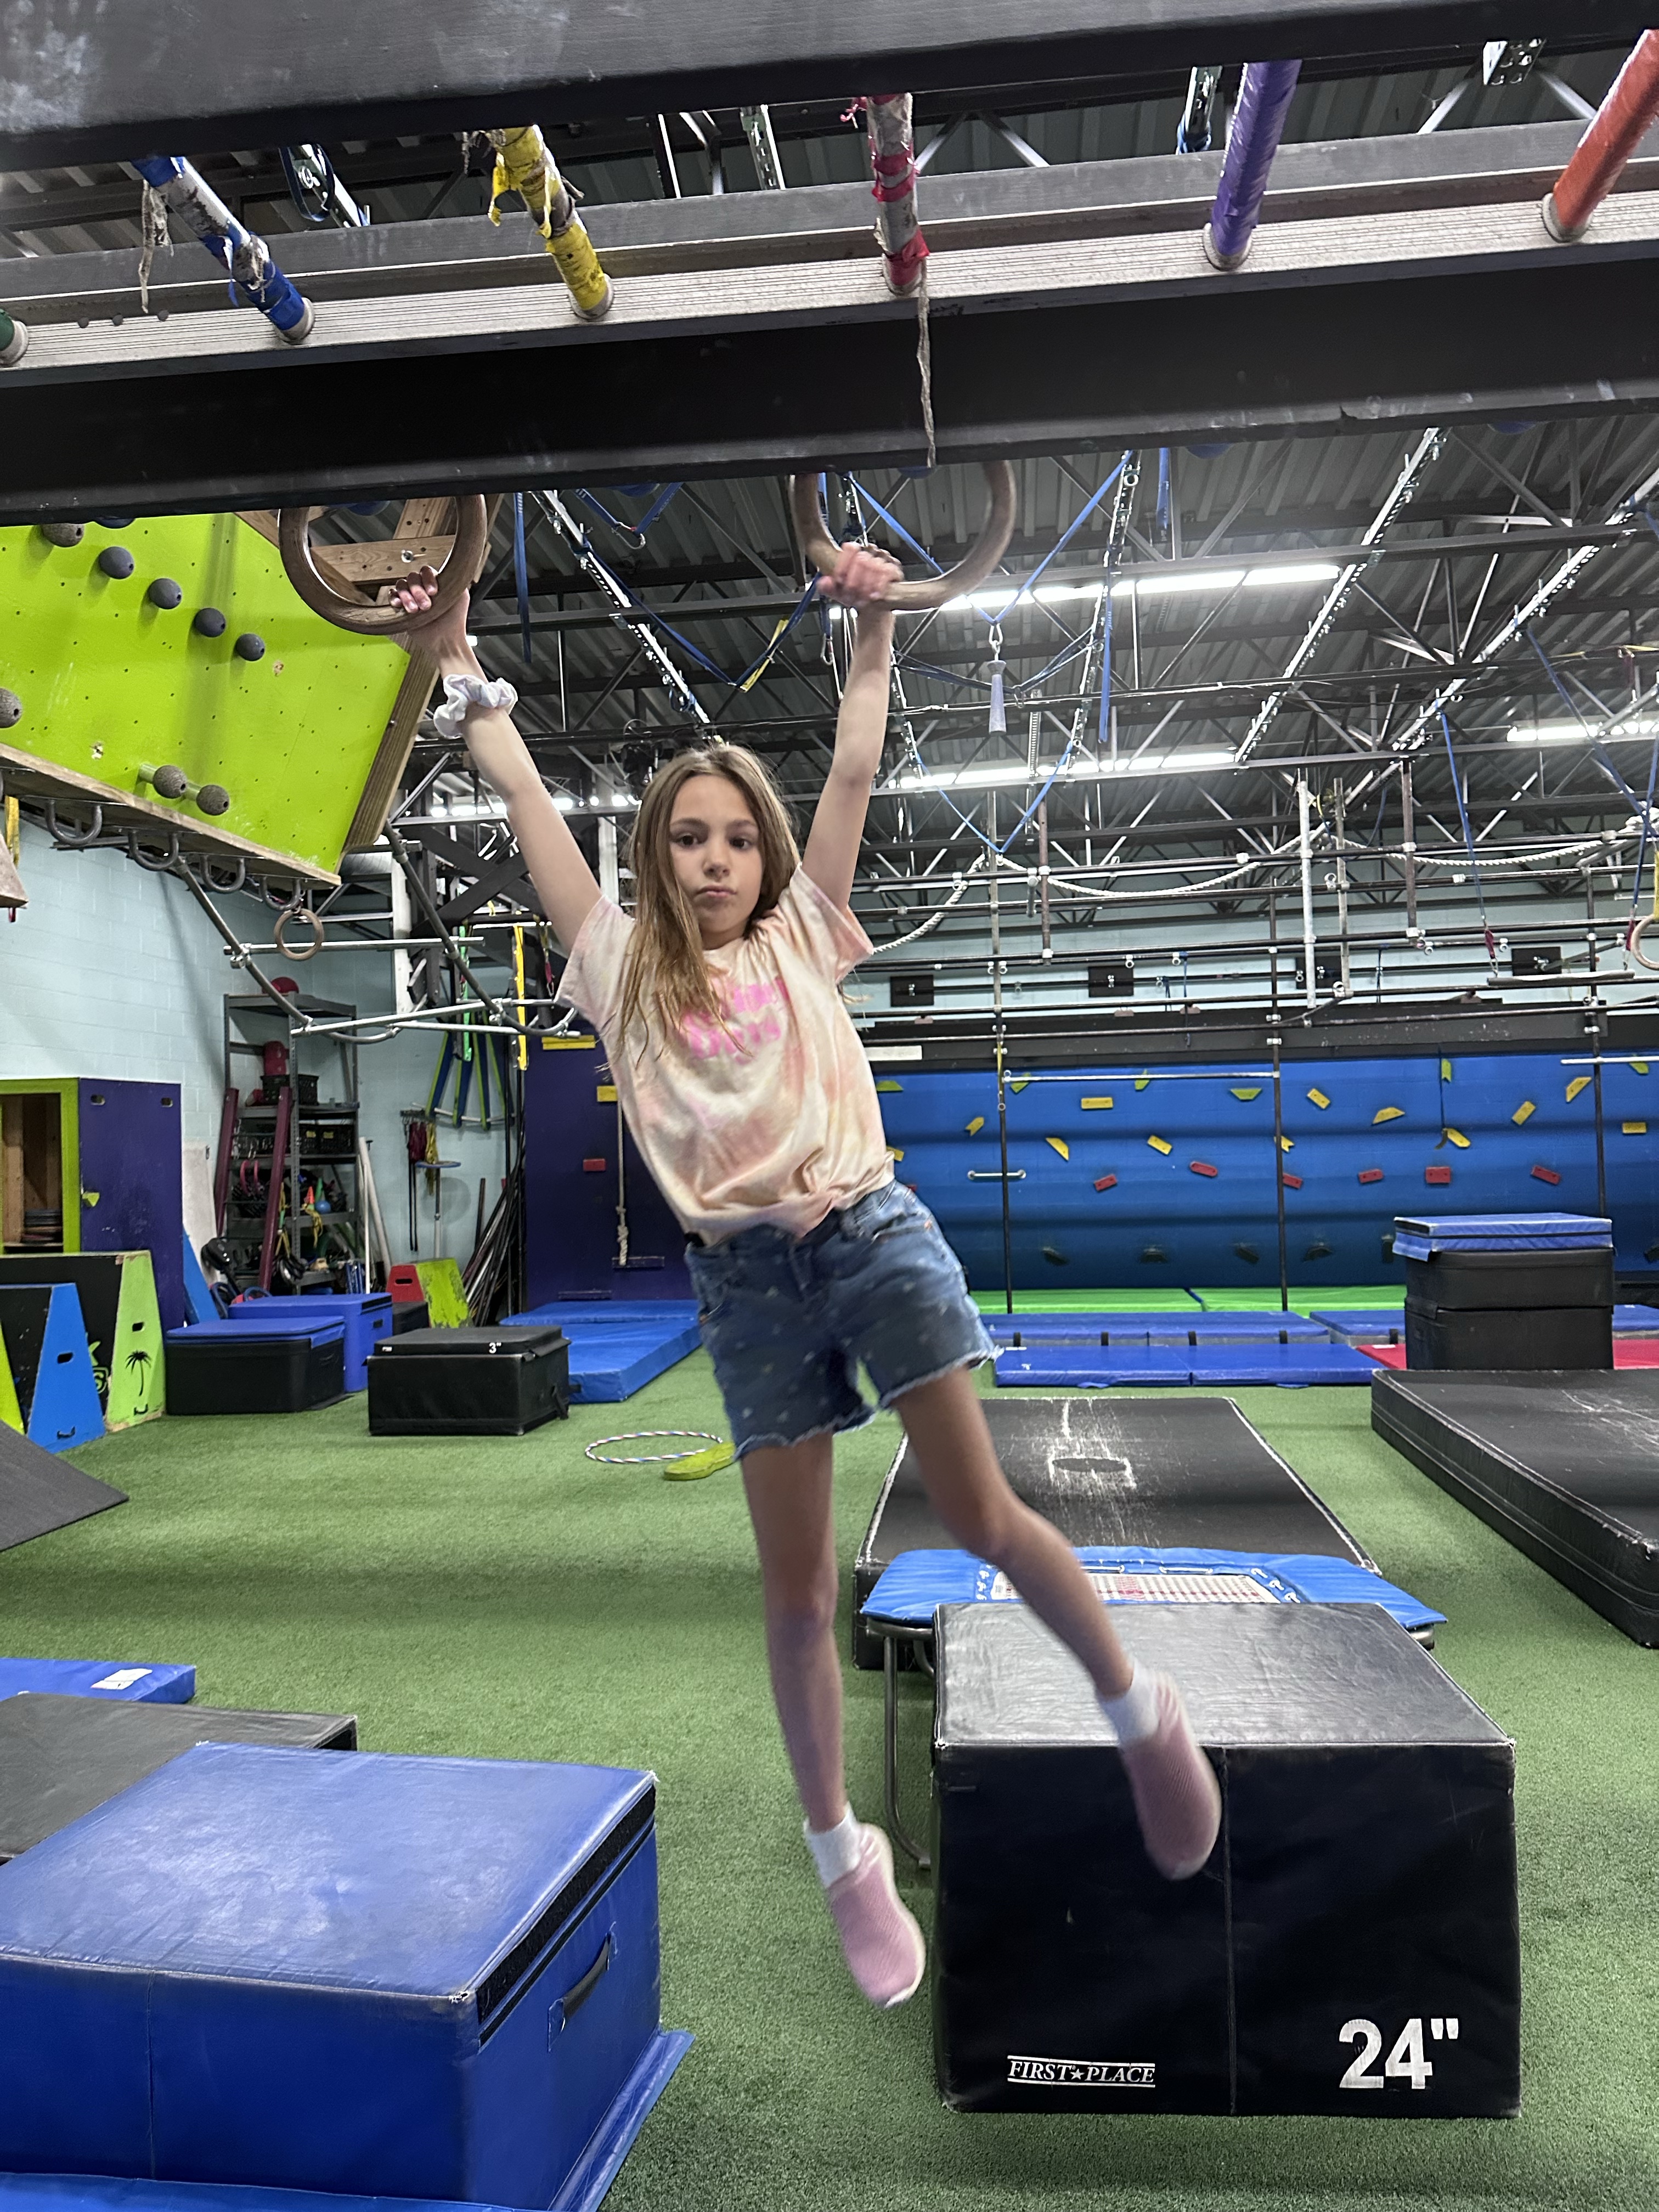 Laid Back Fitness Ninja Gym in Warwick, Rhode Island with kids